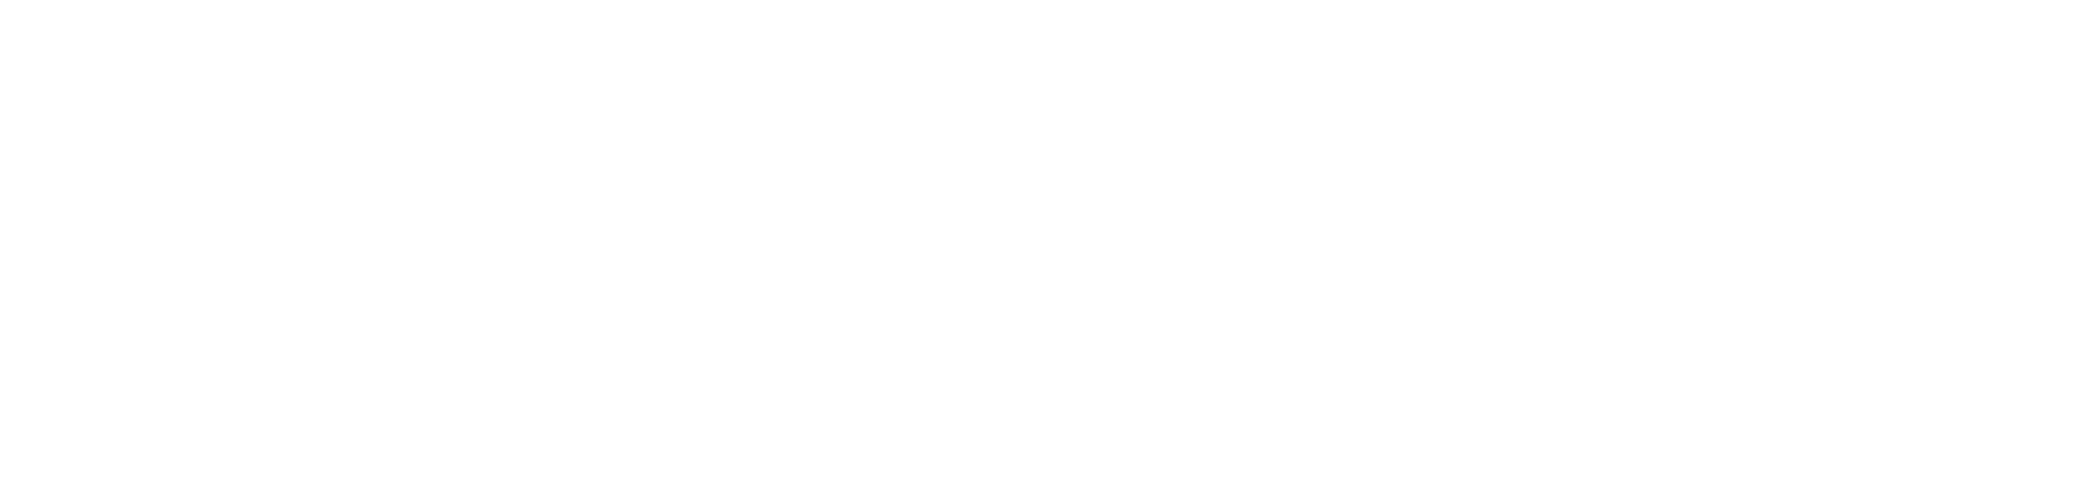 Logo_Xpression-02